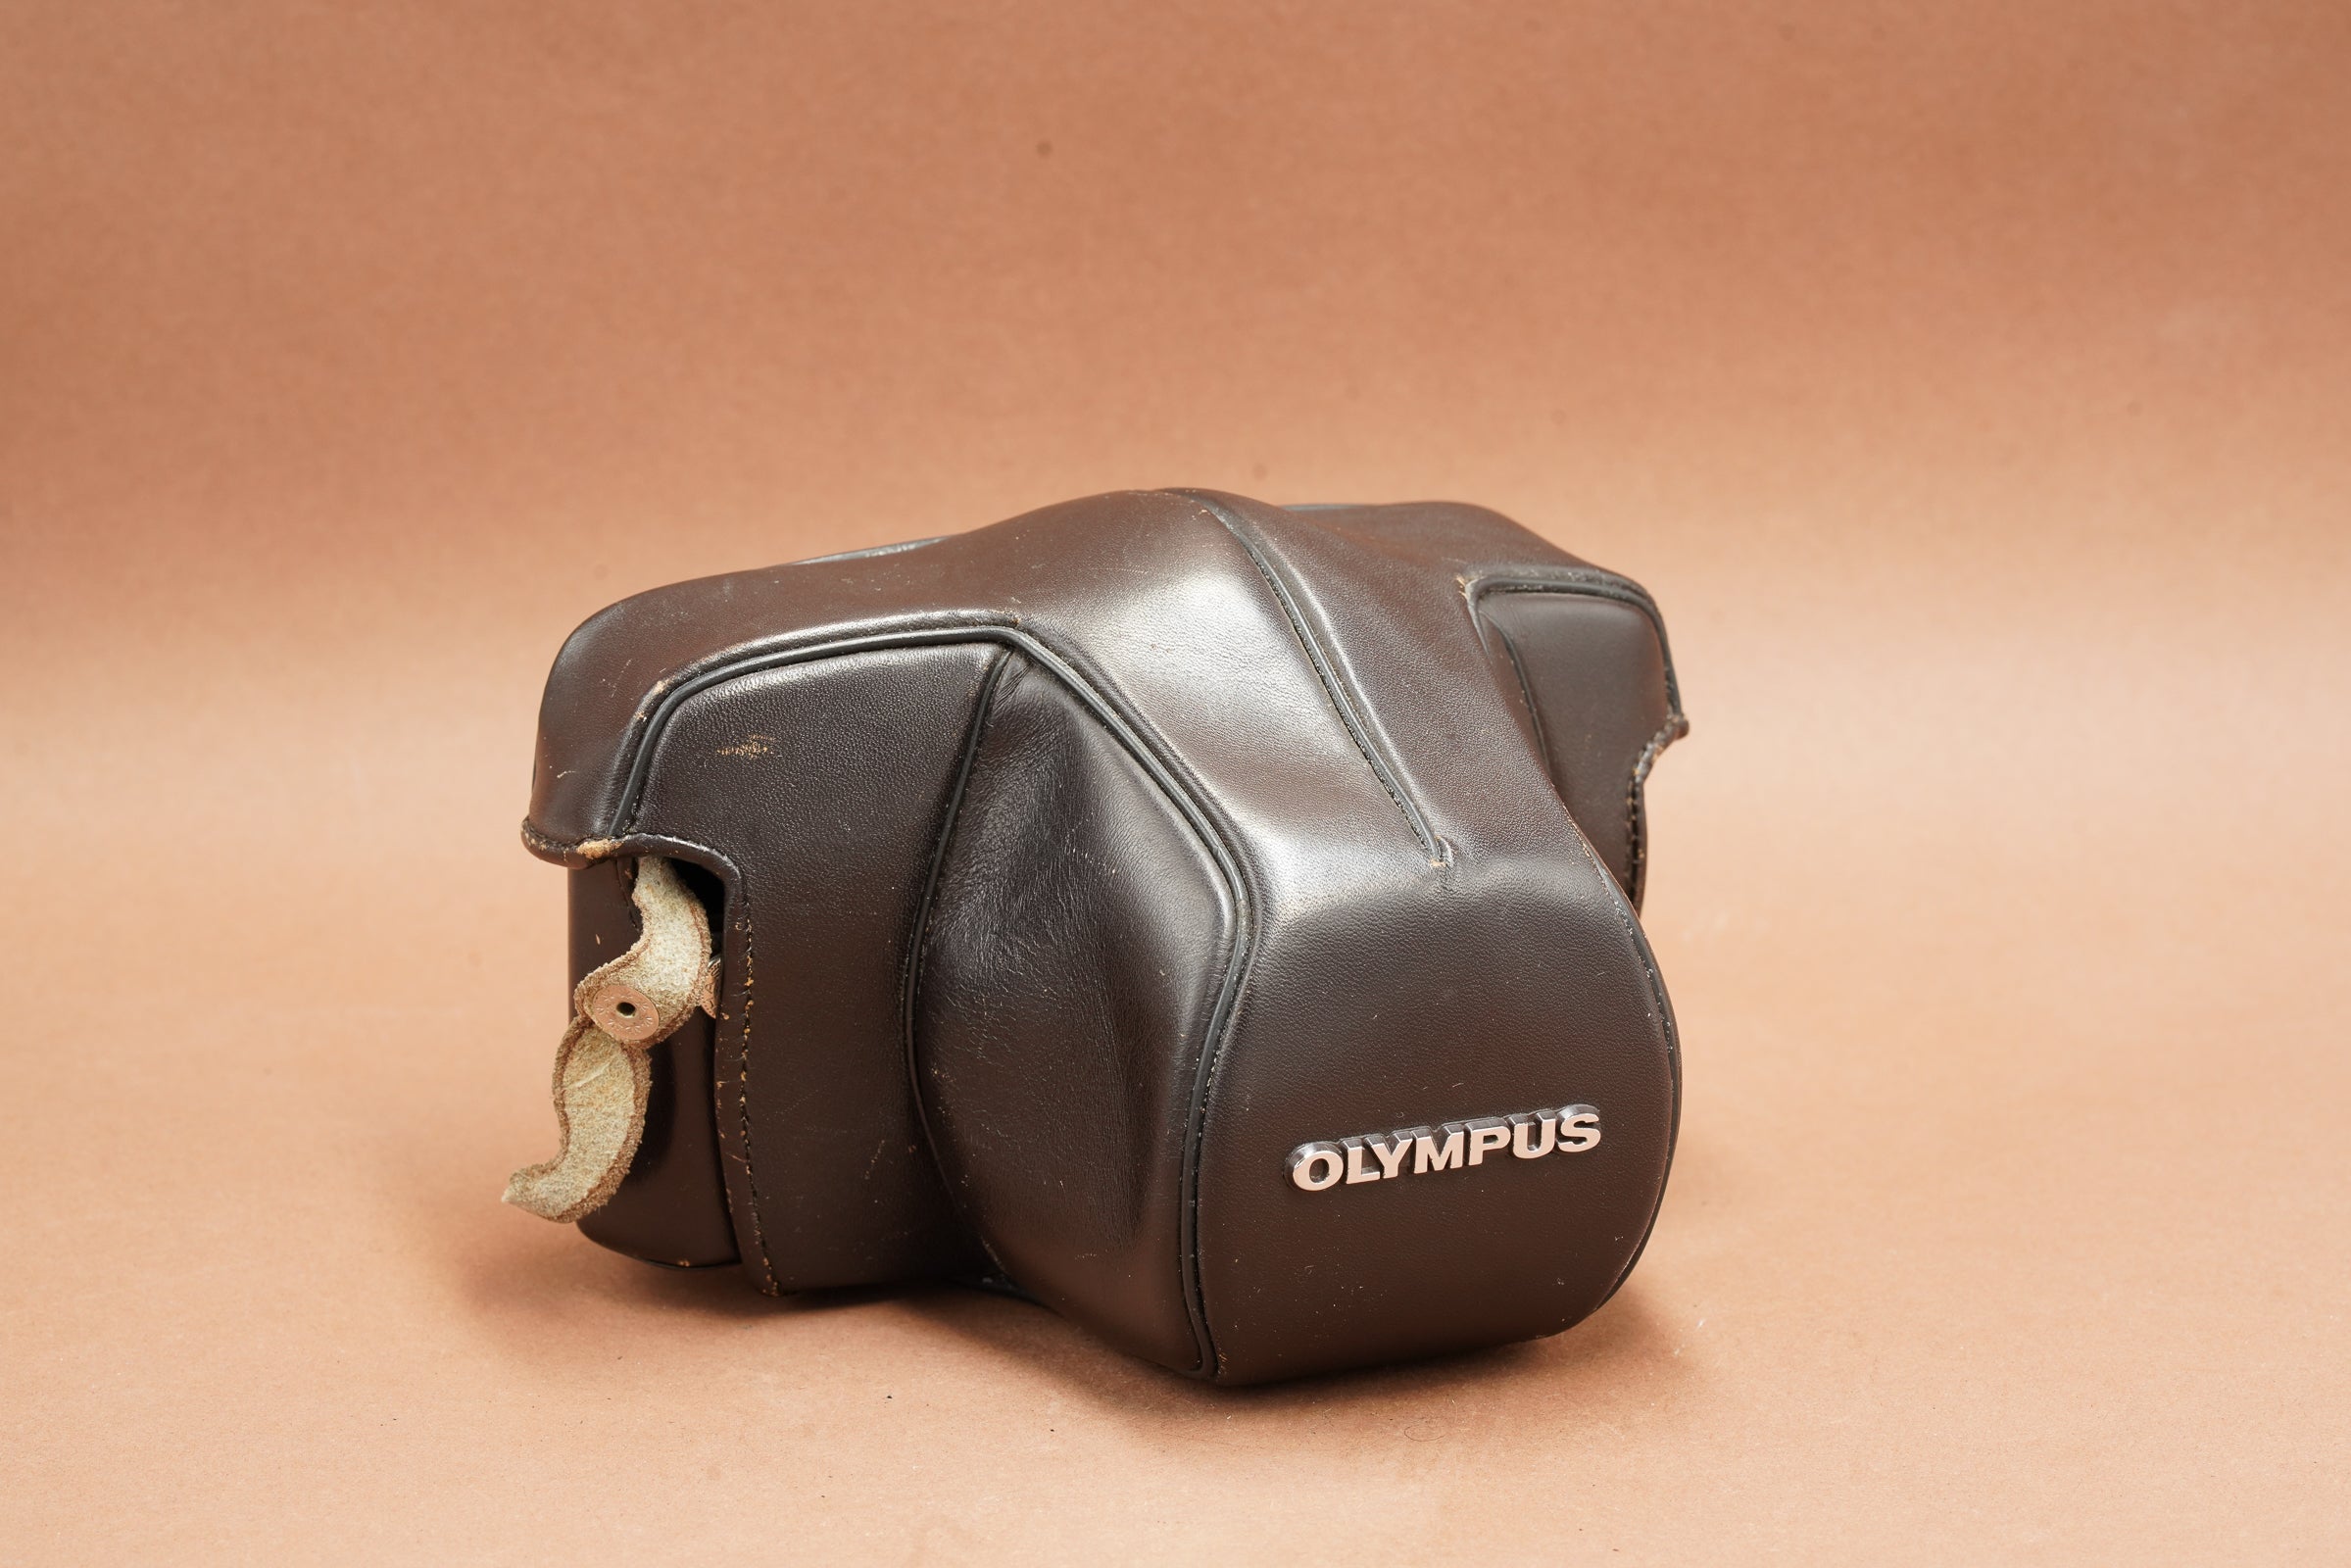 LEATHER CASE for OLYMPUS film camera (Dark brown)